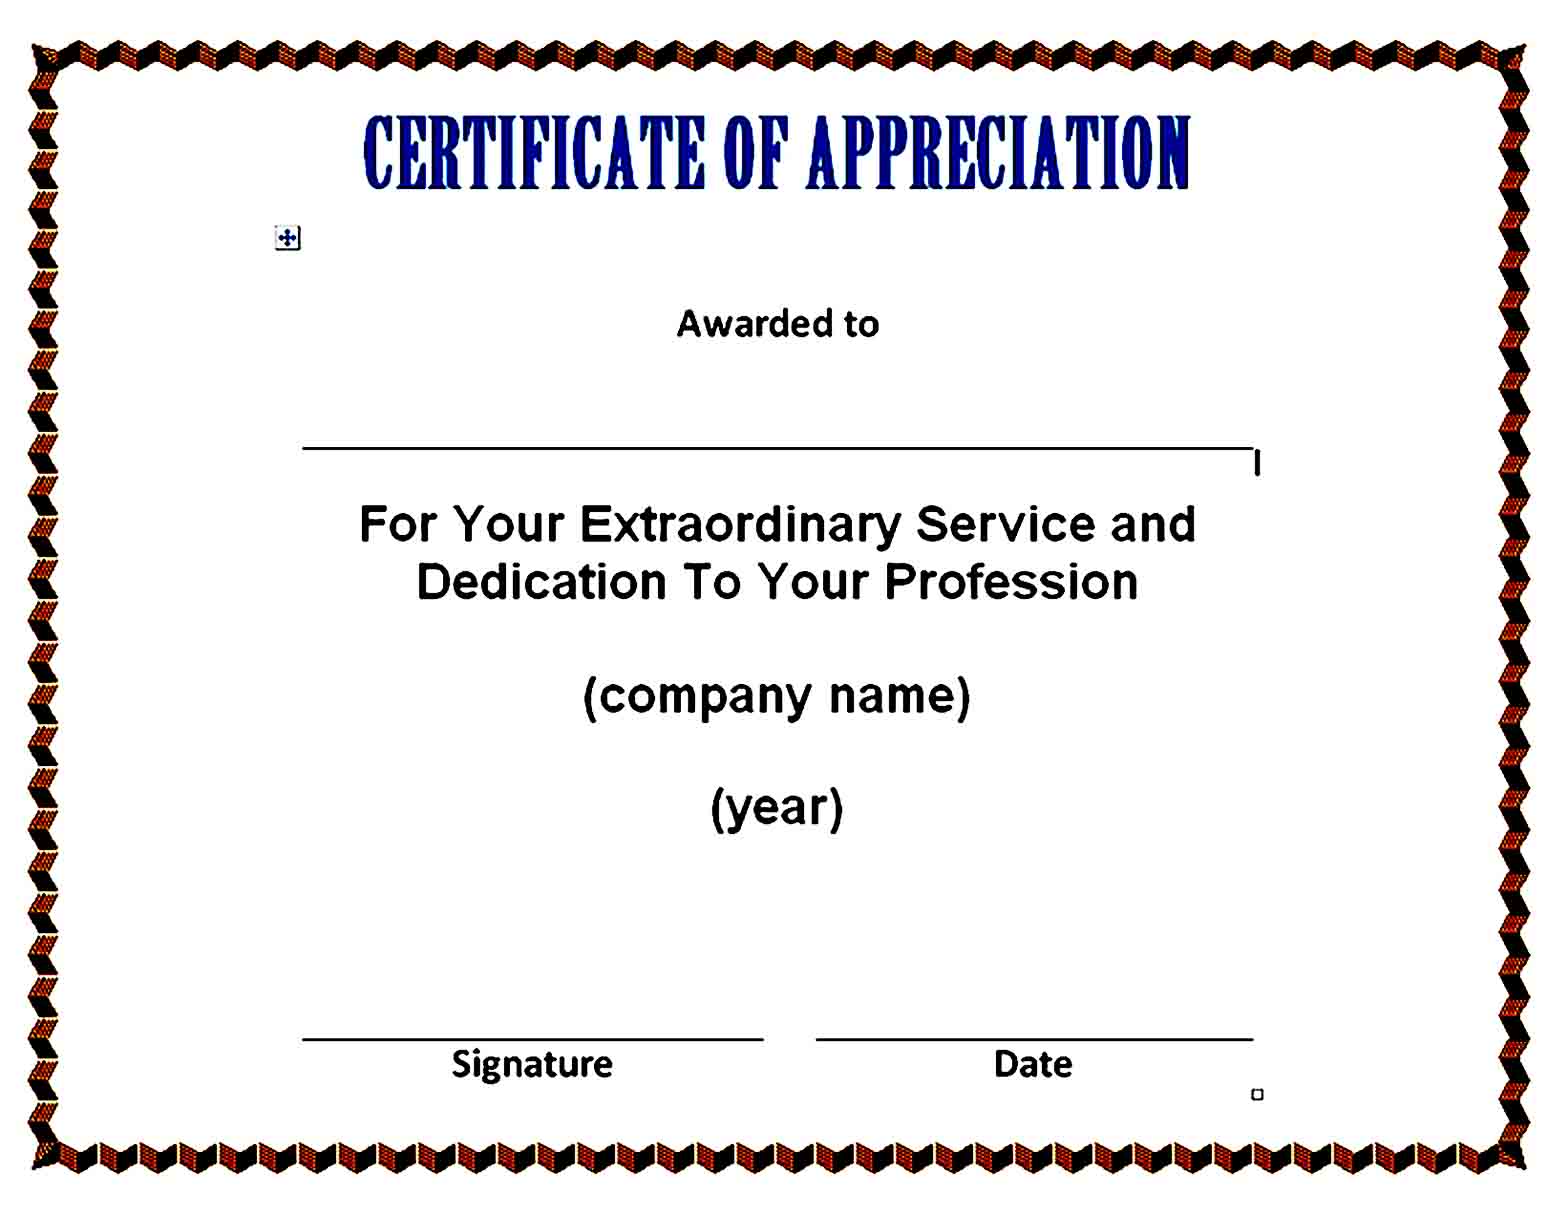 Certificate of Appreciation 04